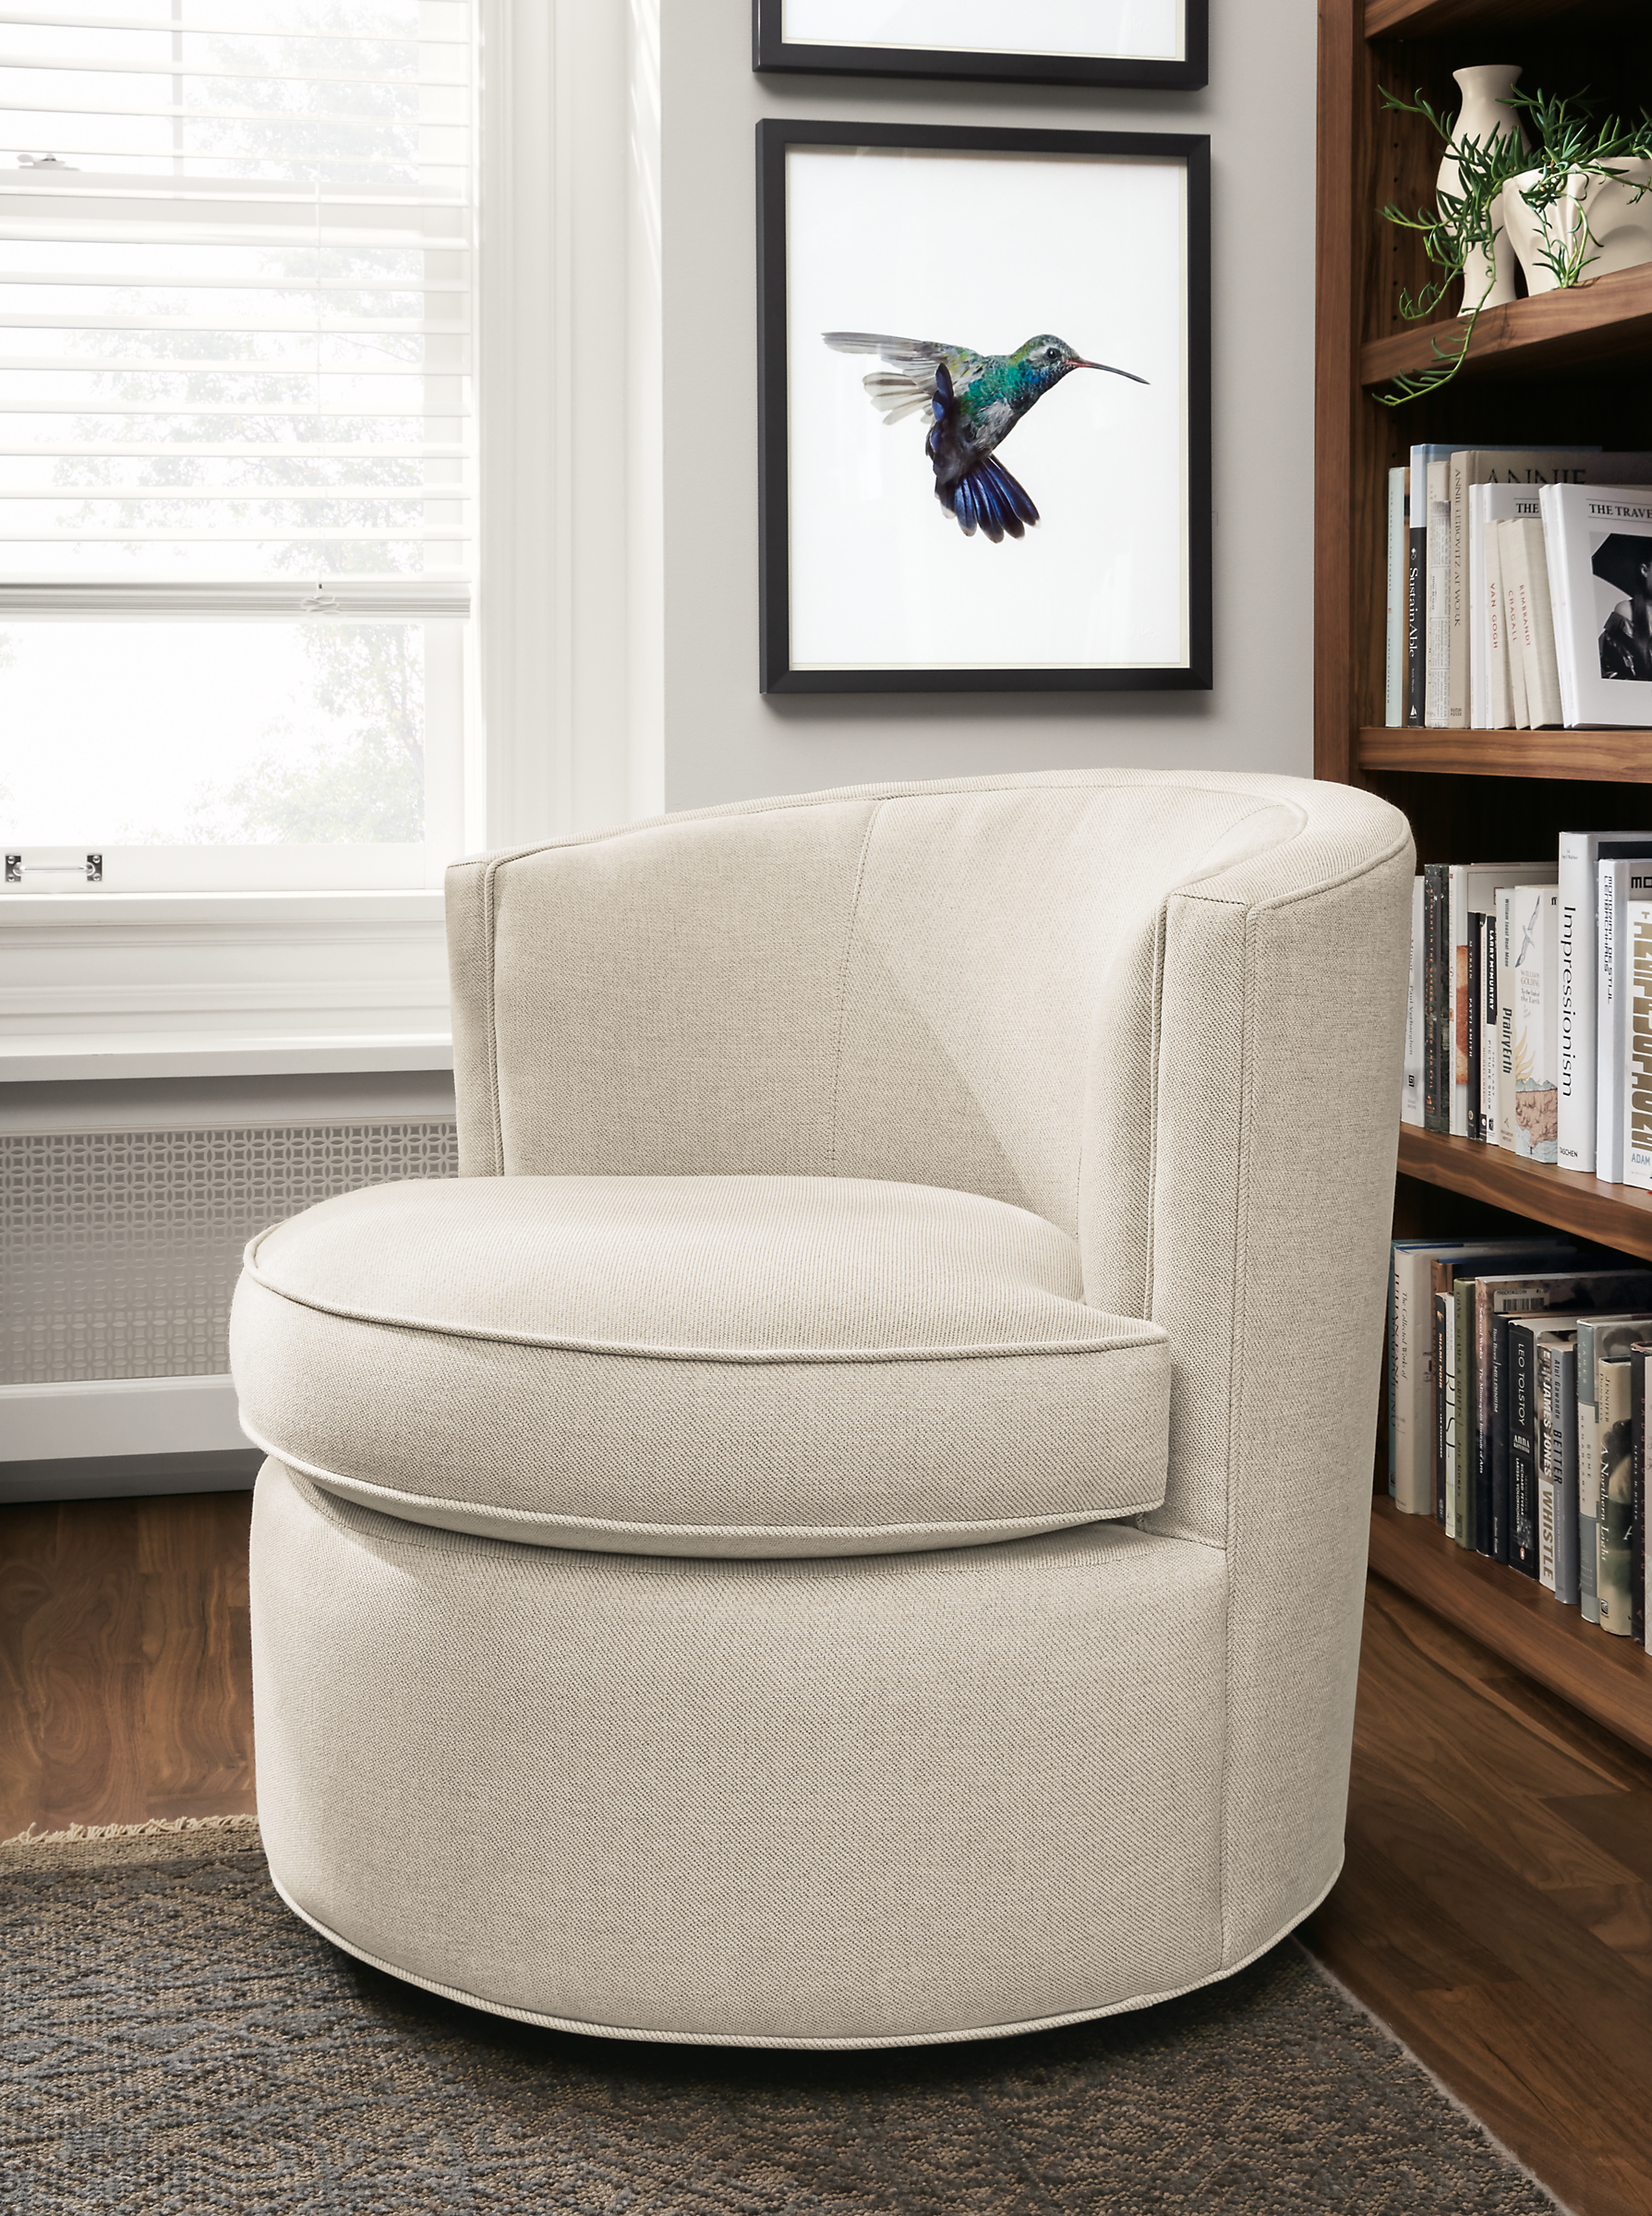 Detail of Otis swivel chair in Gino Oatmeal fabric.